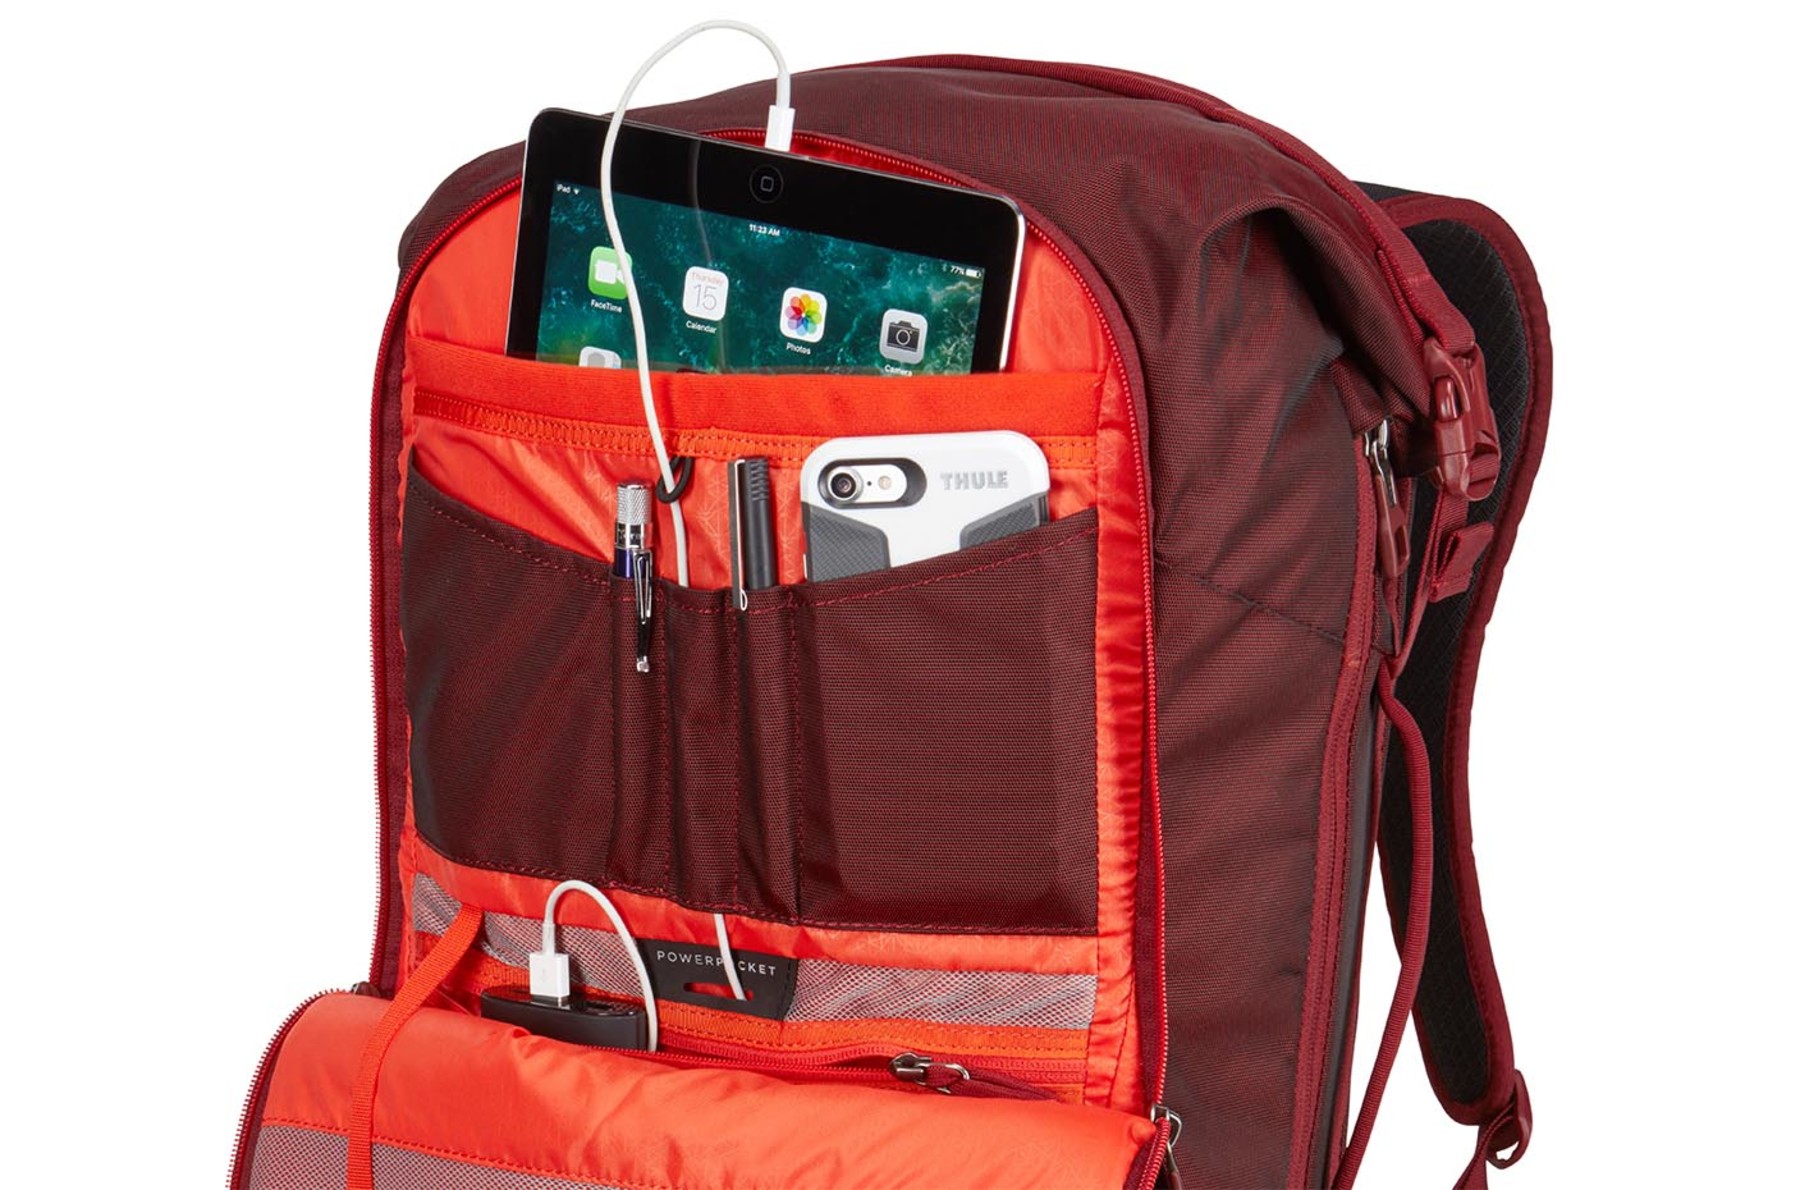 34l travel backpack